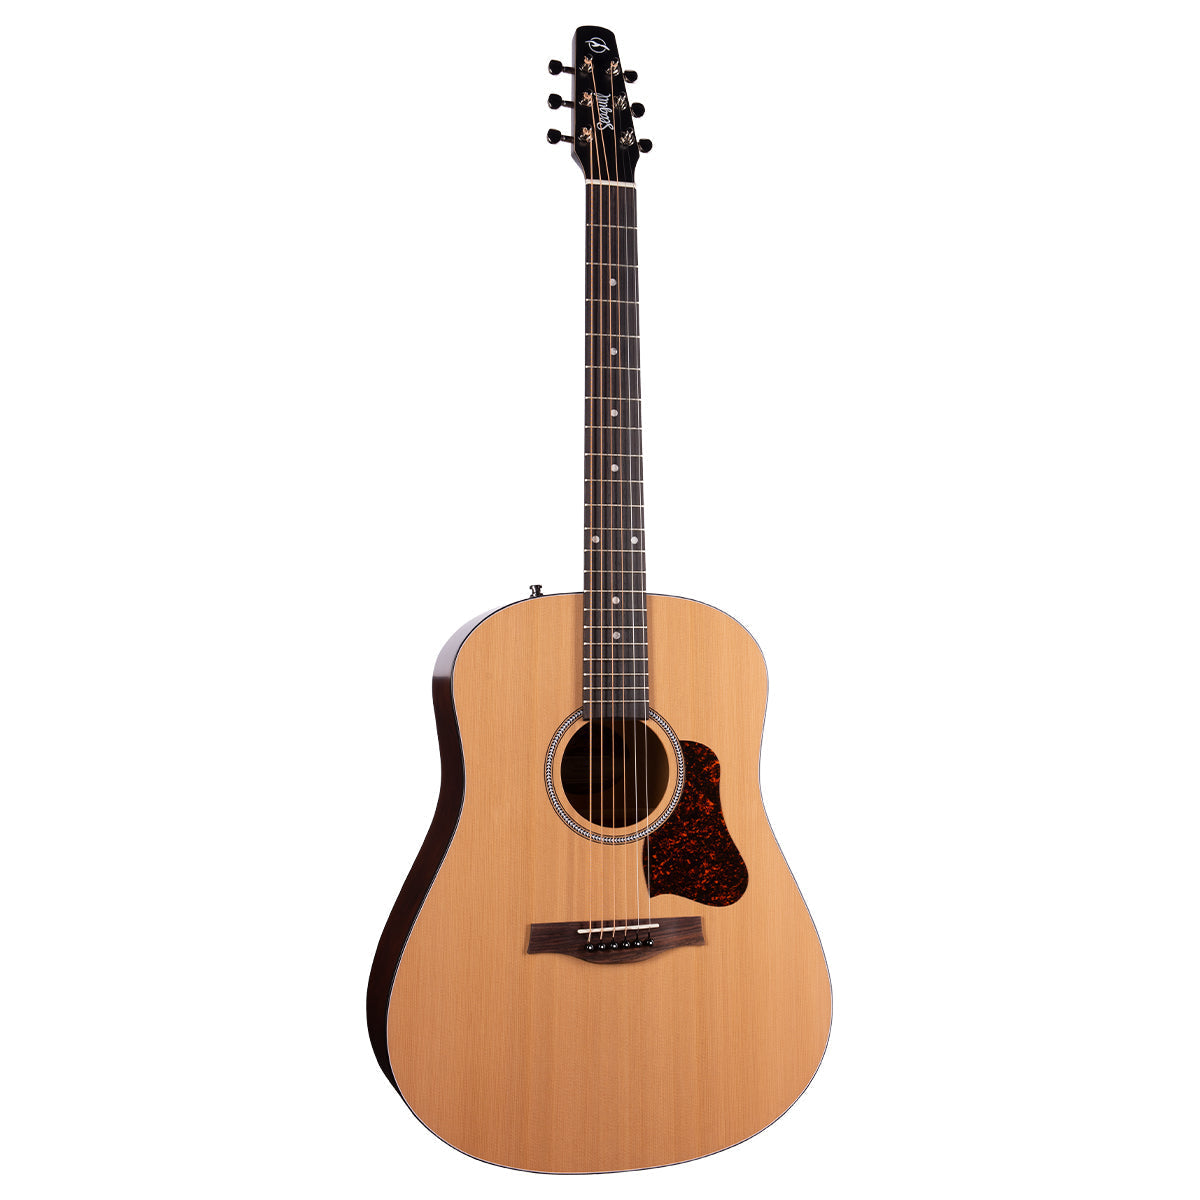 Seagull S6 Original Acoustic Guitar ~ Natural, Acoustic Guitar for sale at Richards Guitars.